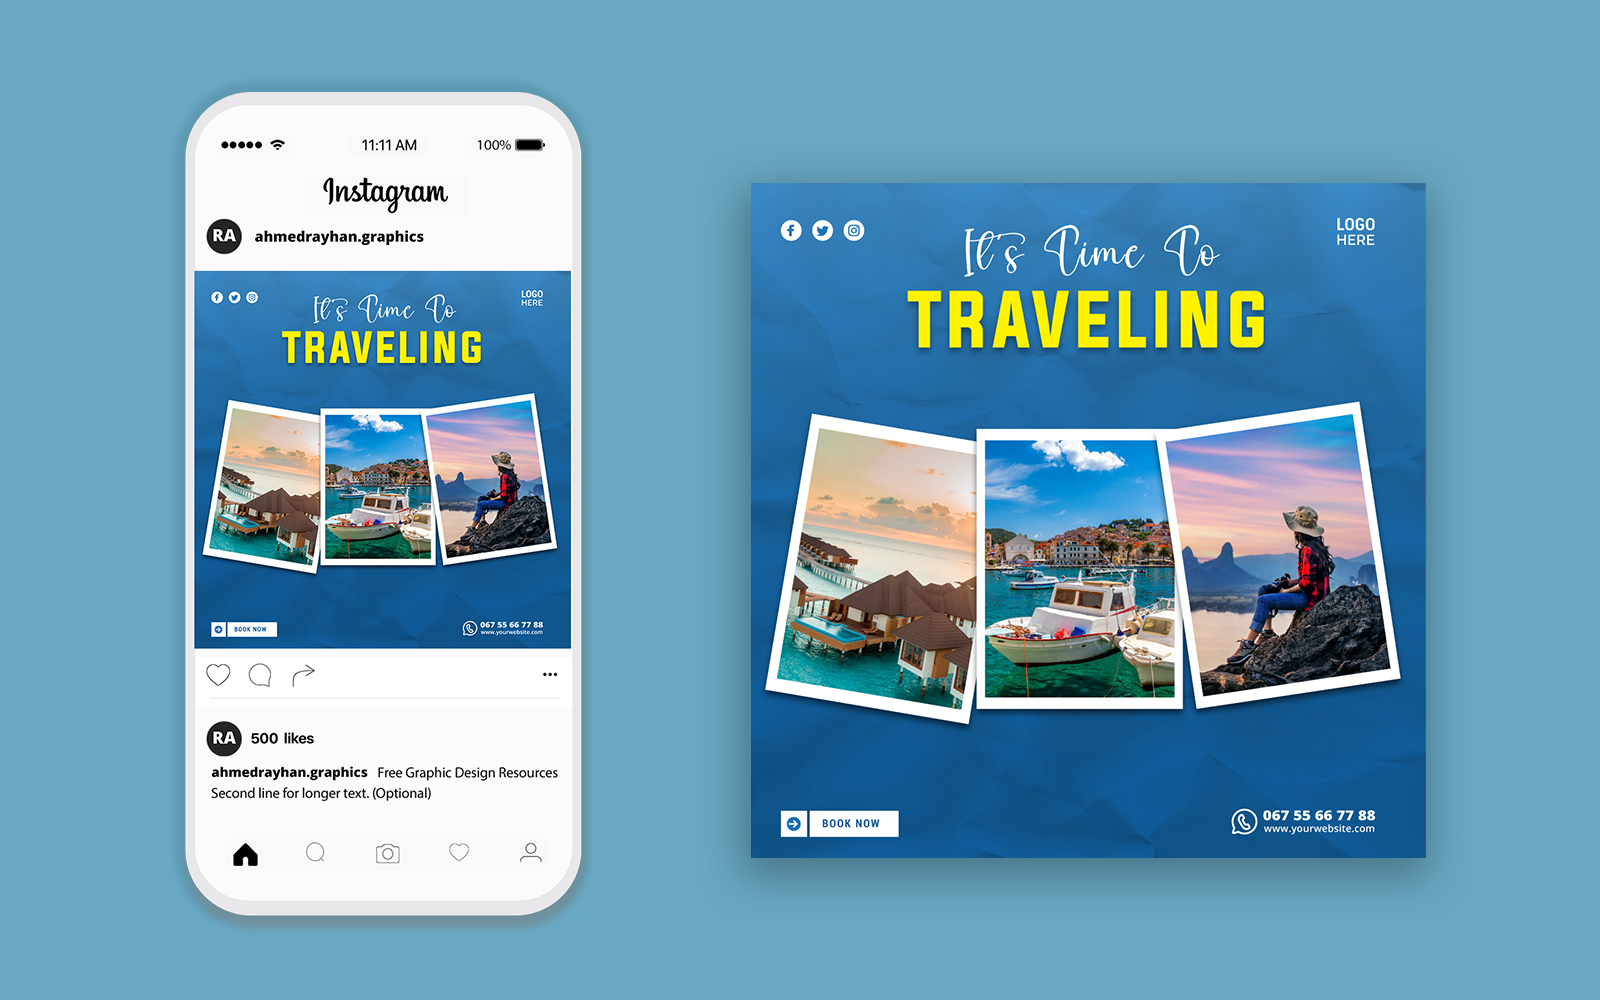 Travel agency advertisement social media post design volume 02